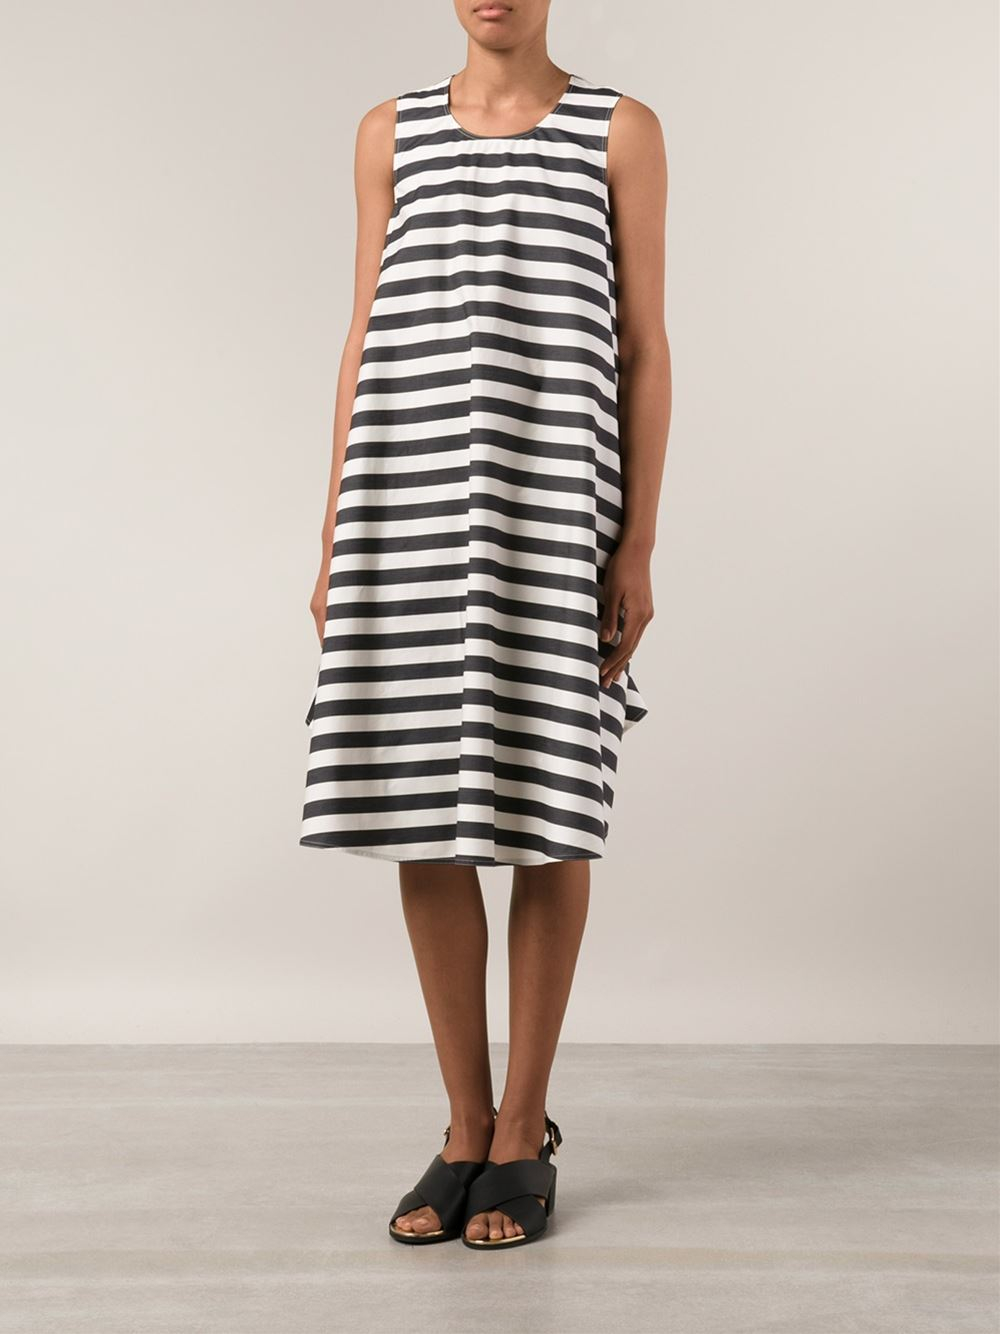 Sofie d'hoore Horizontal Stripe Tunic Dress in Black | Lyst